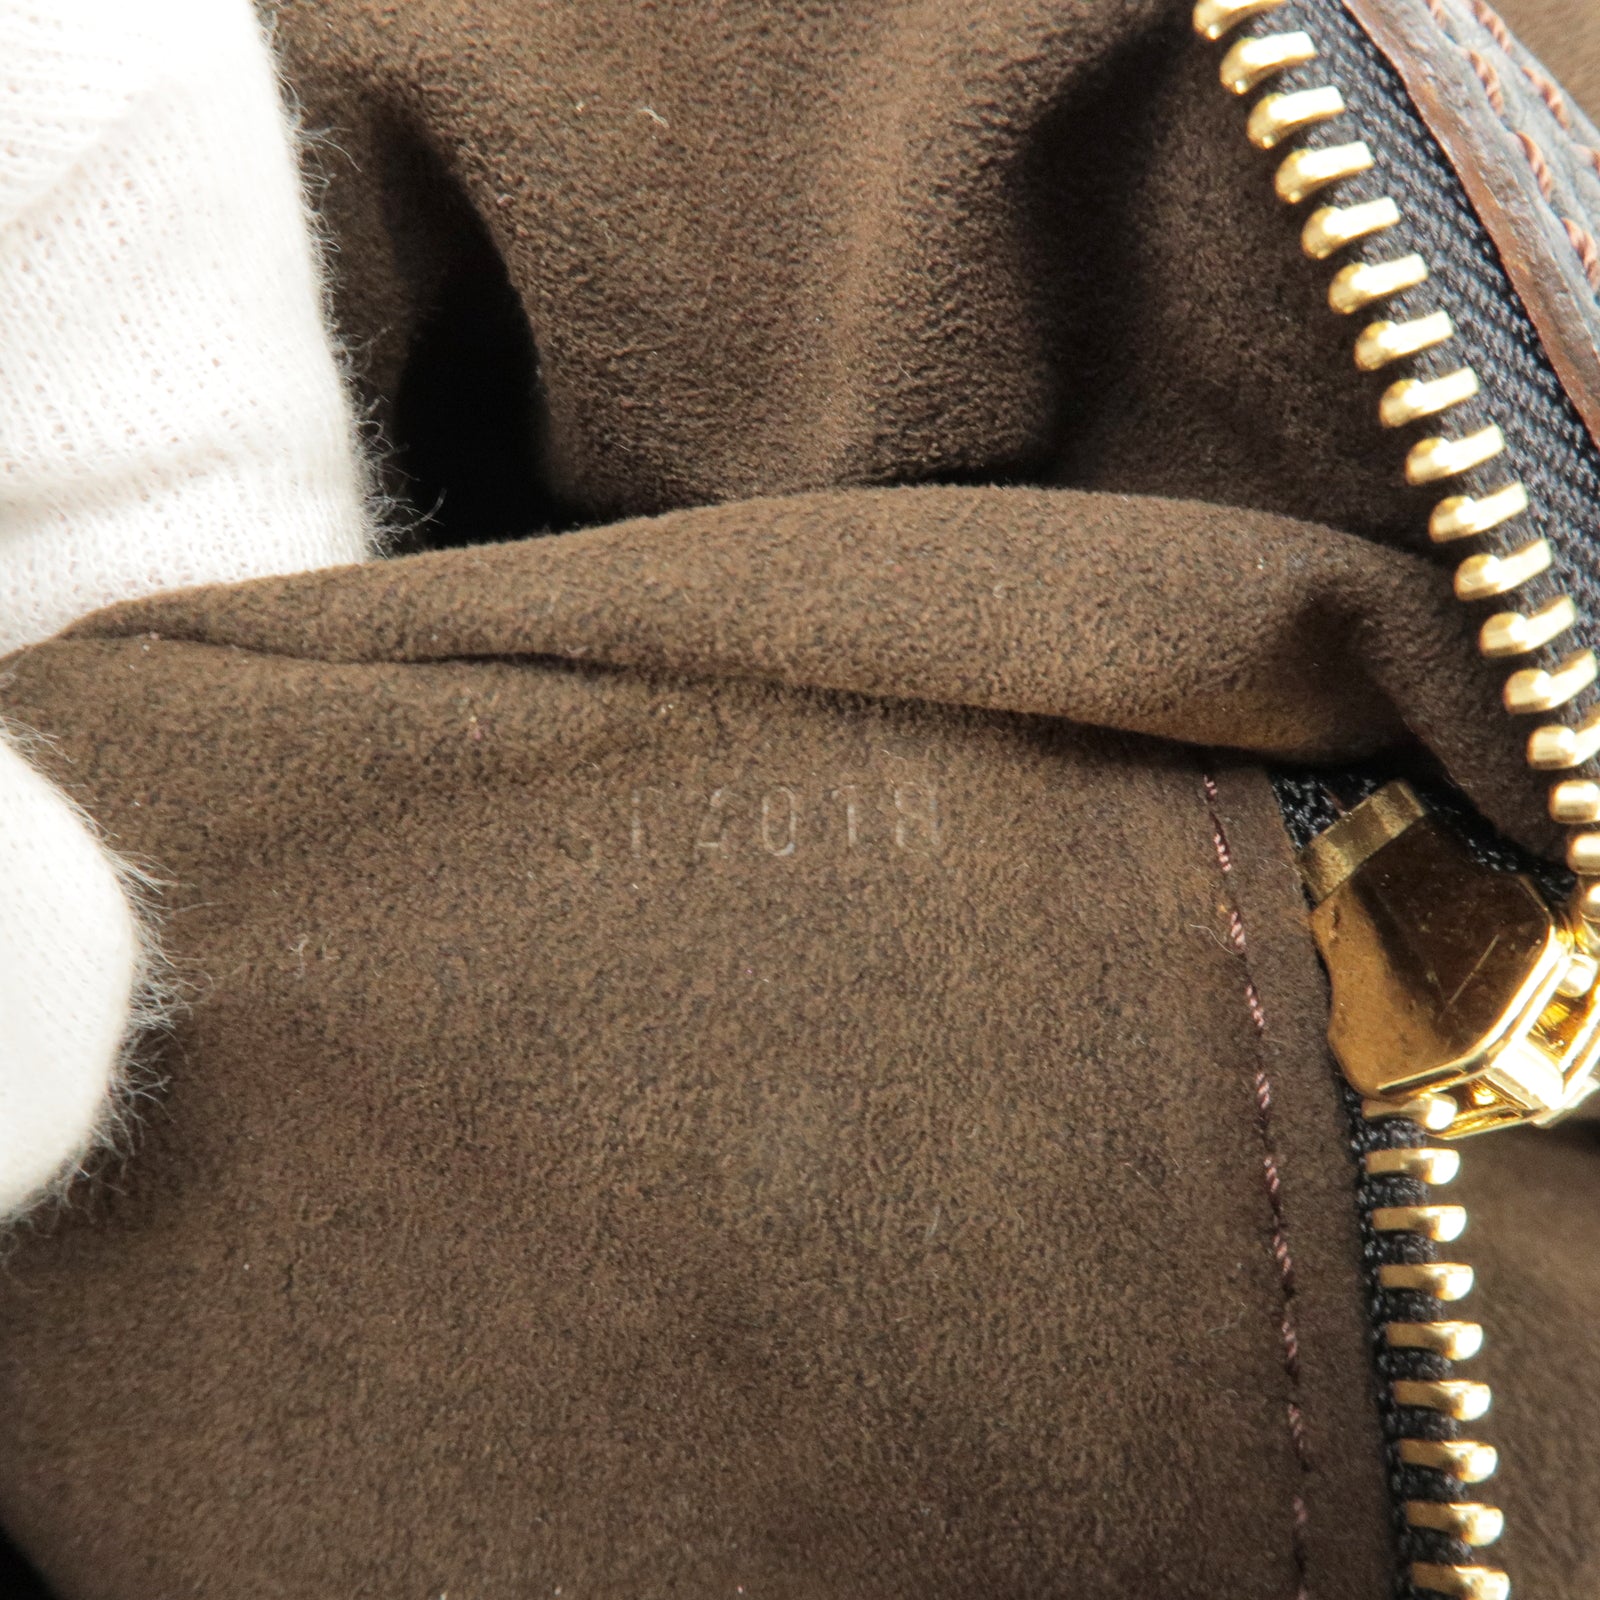 Louis Vuitton Mahina L Hobo Shoulder Bag Espresso Brown Monogram